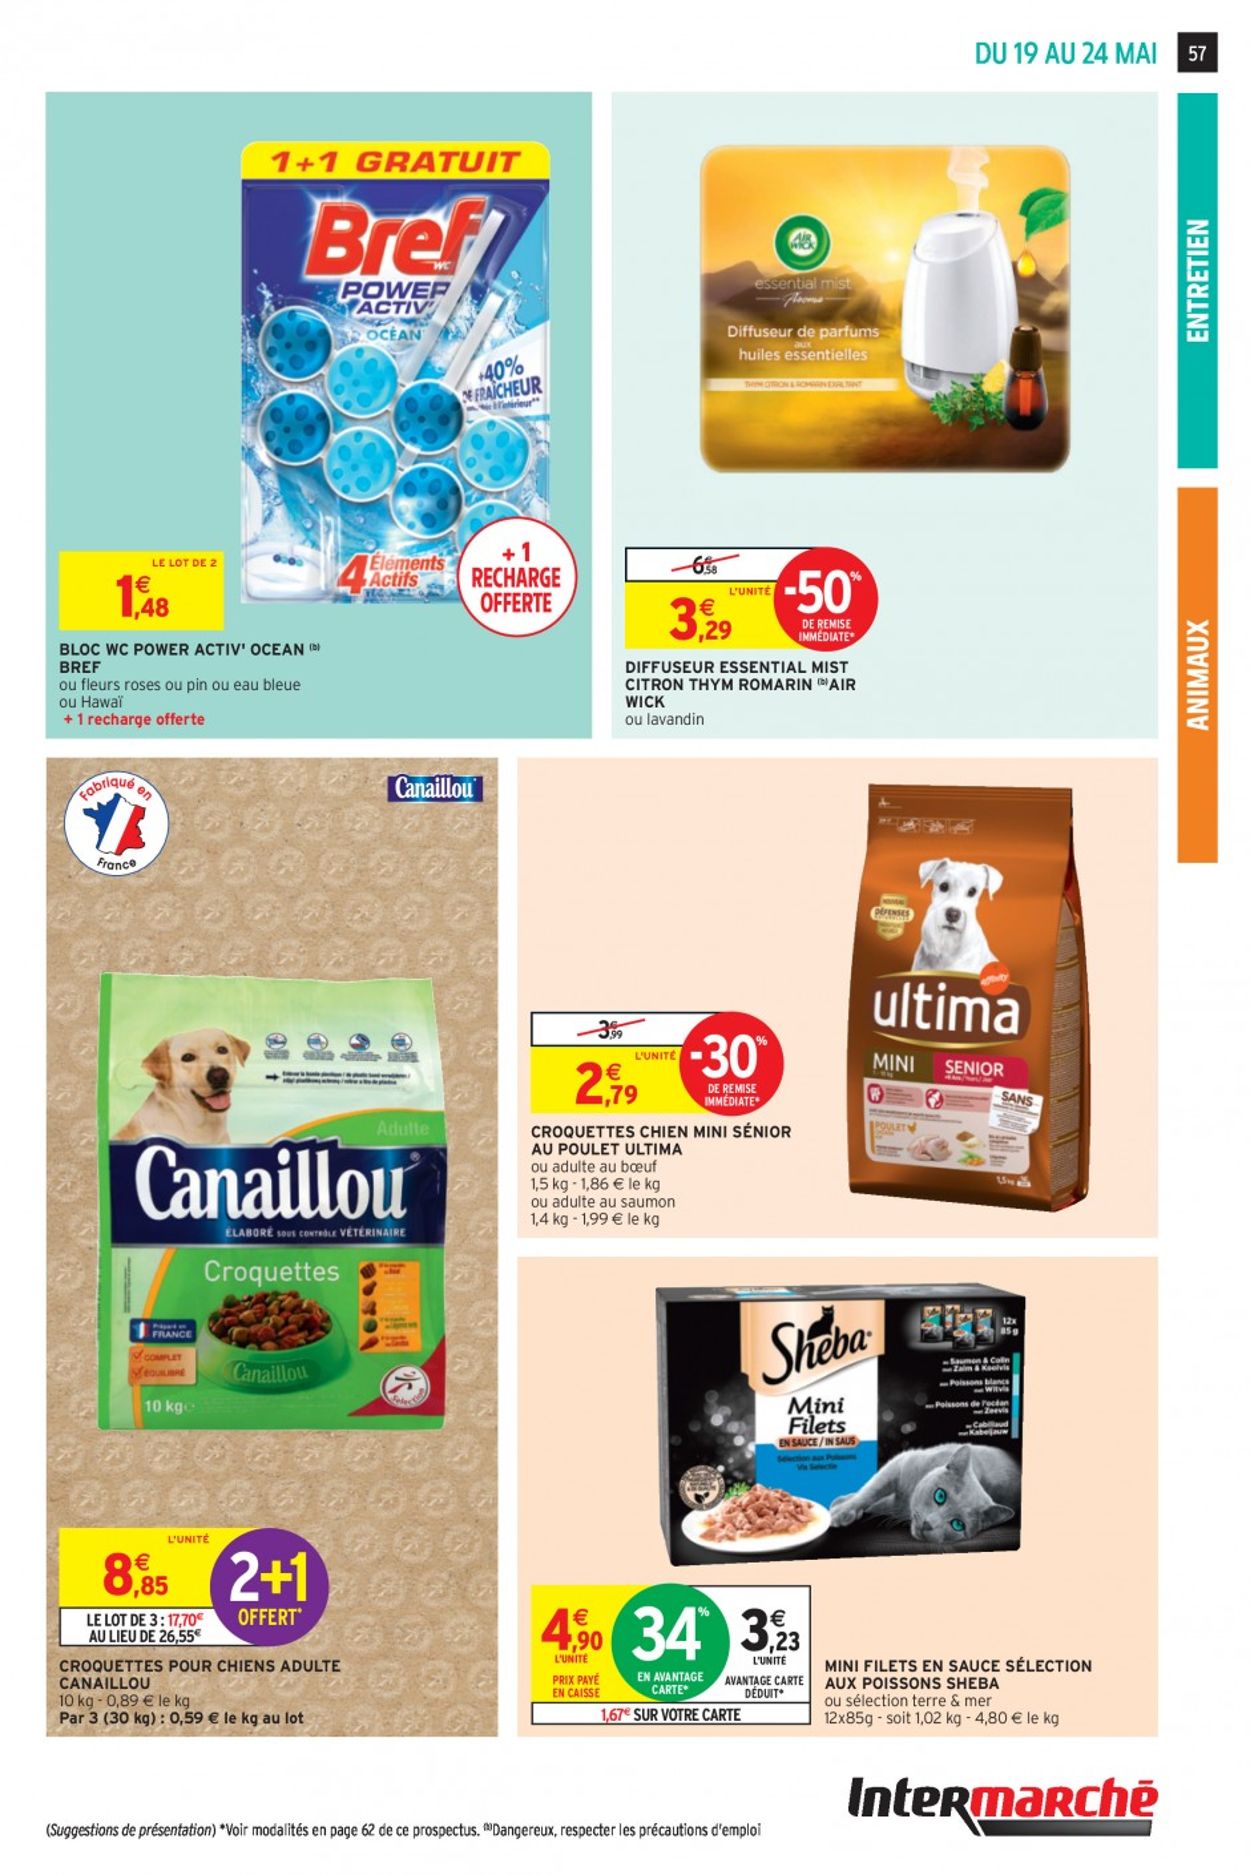 Intermarché Catalogue - 19.05-24.05.2020 (Page 51)